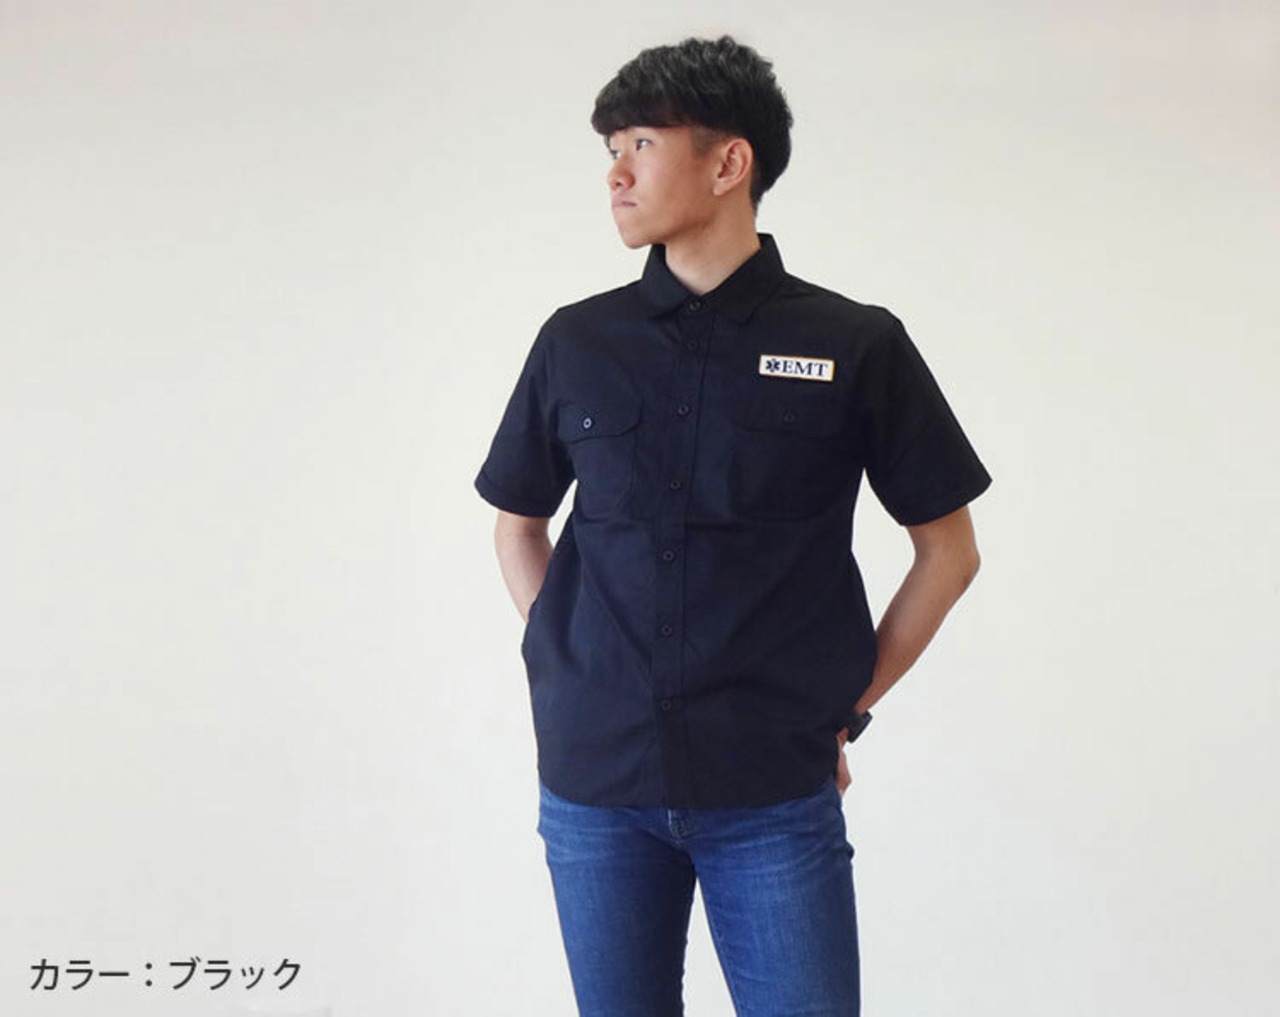 GUARD (ガード) PARAMEDIC EMT ワークシャツ [WS-246]